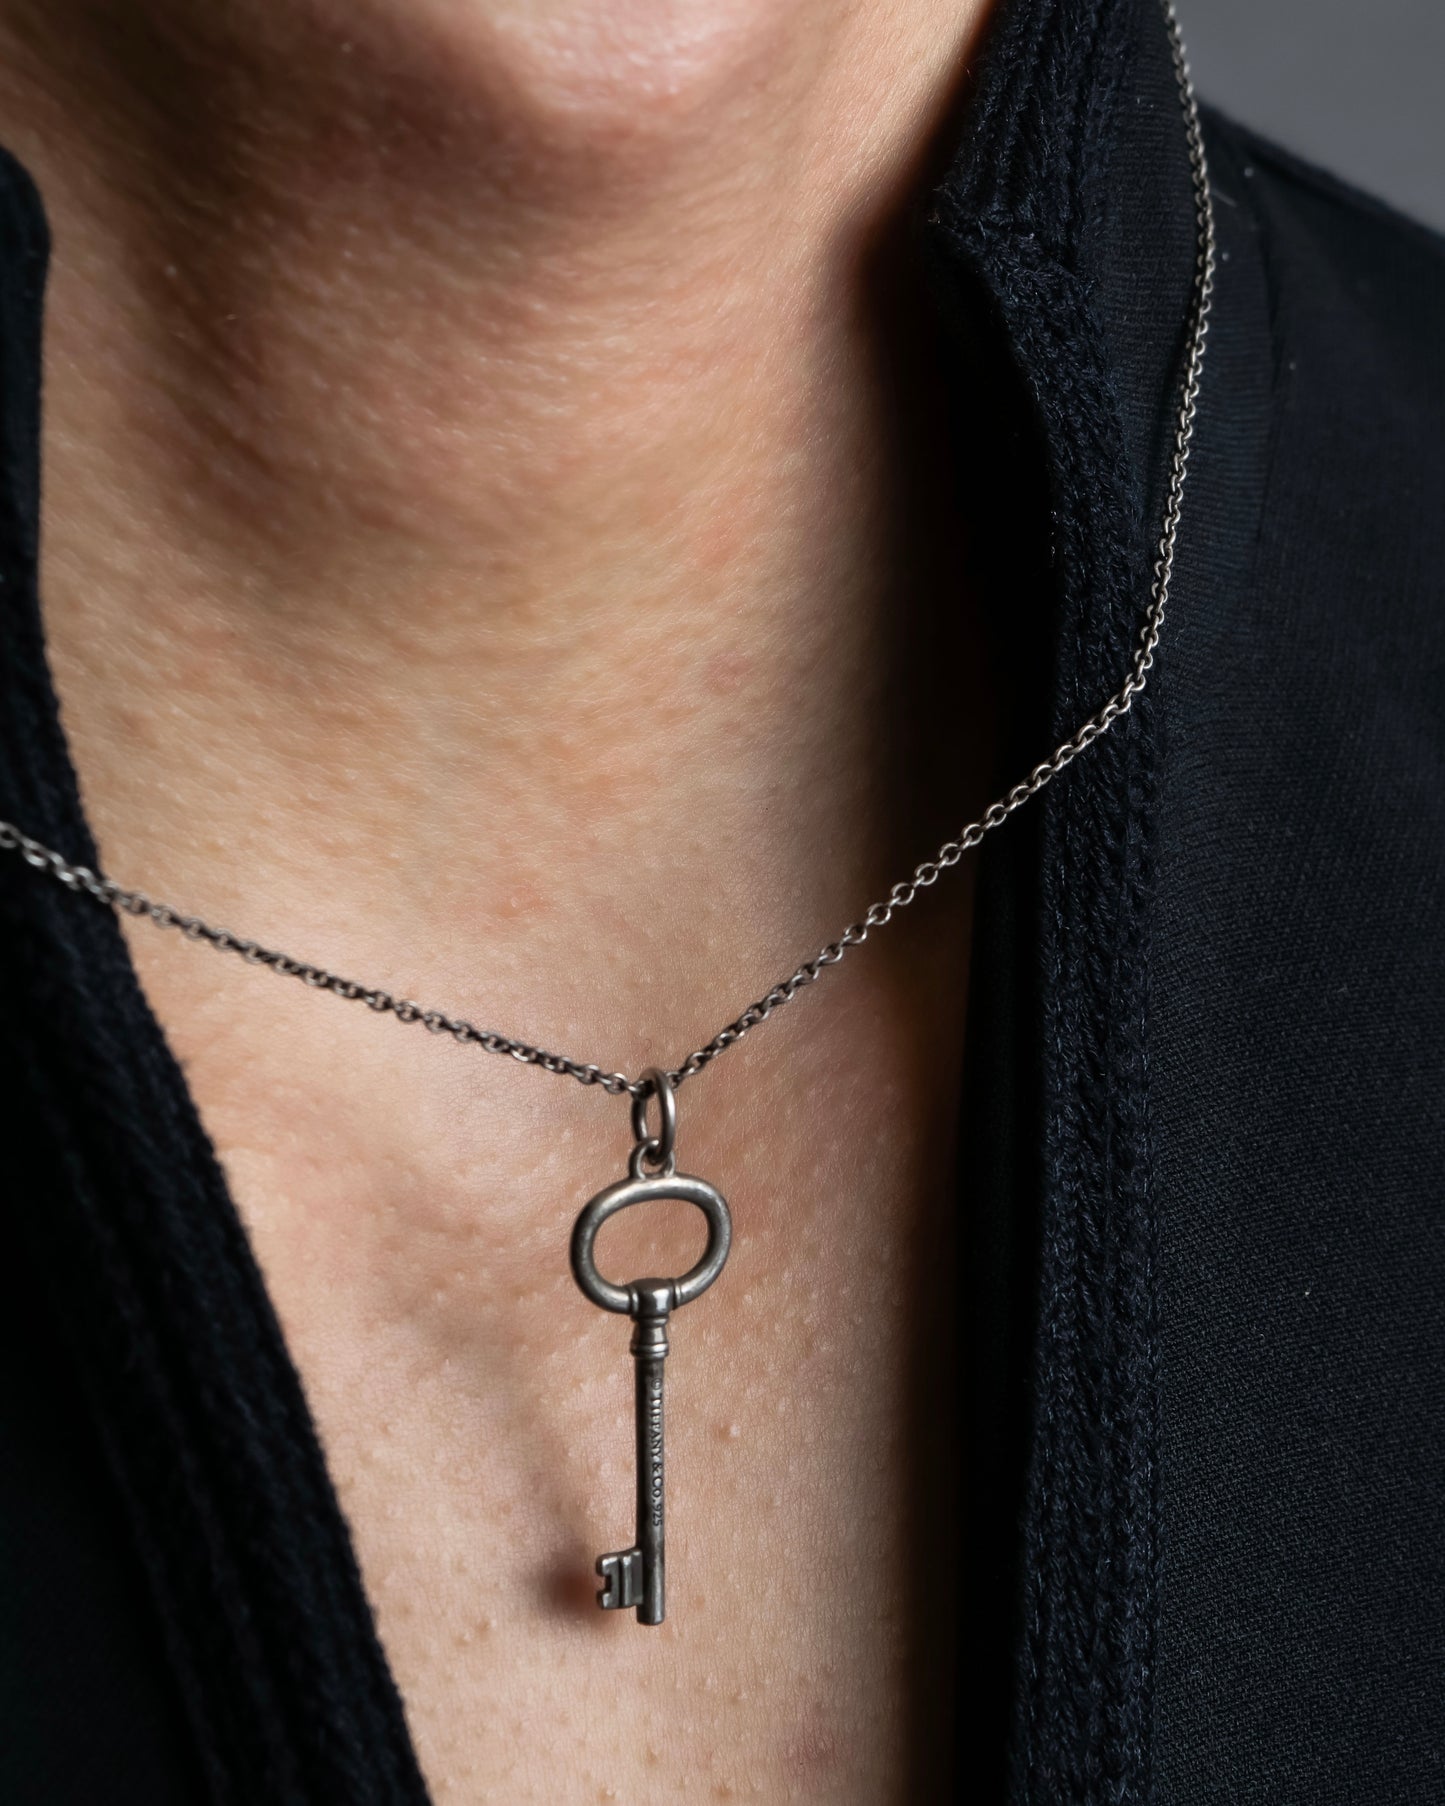 "Tiffany&Co" Key design necklace